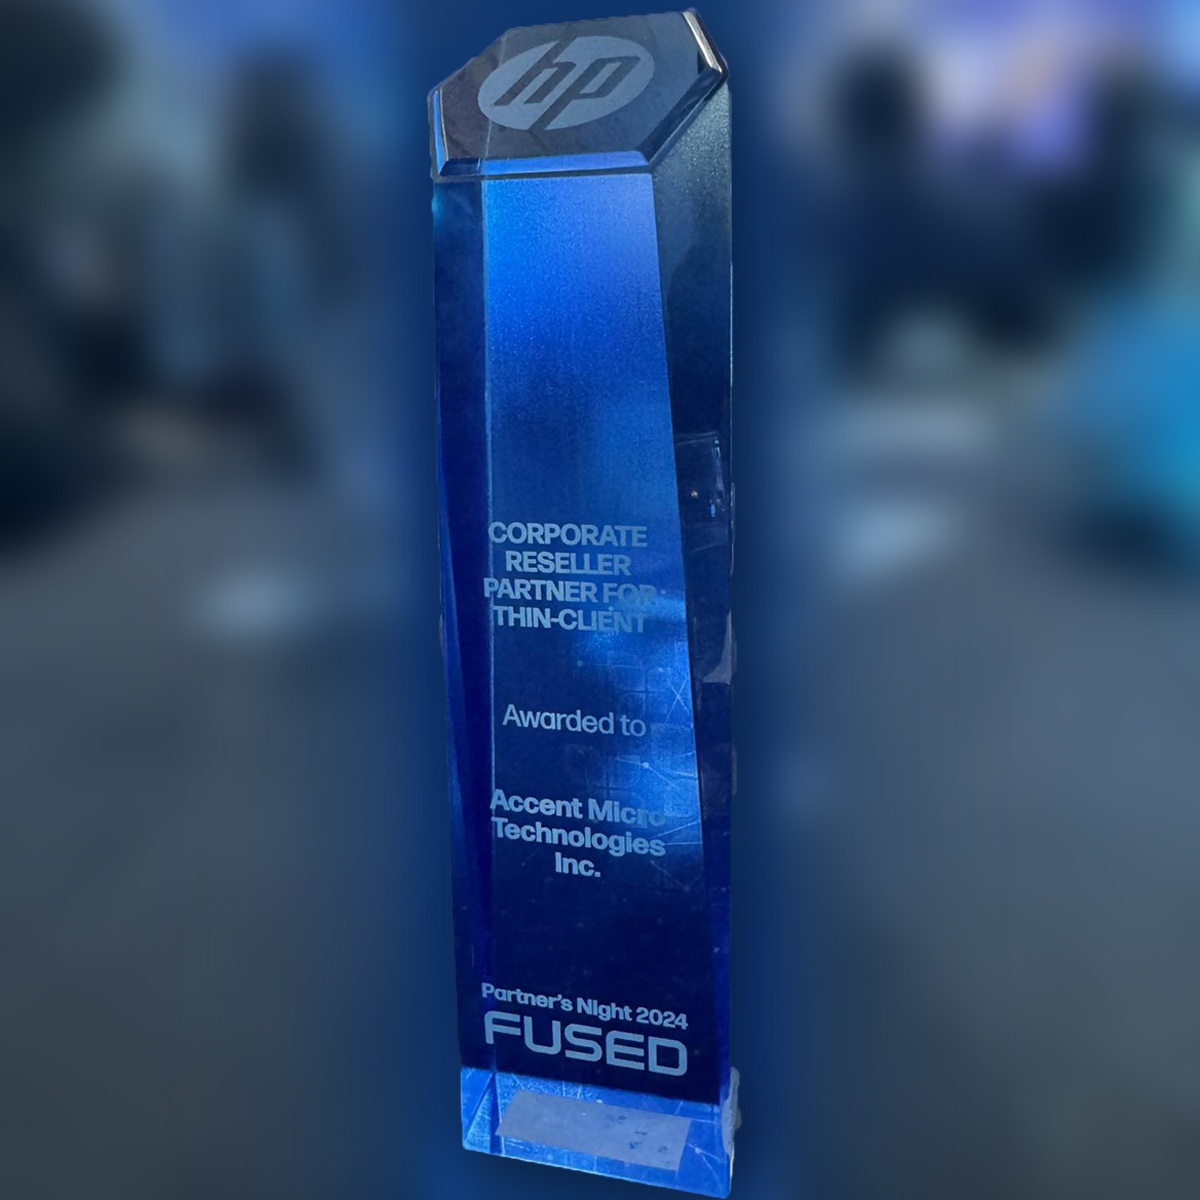 AMTI received the HP 2024 Corporate Reseller Partner Award